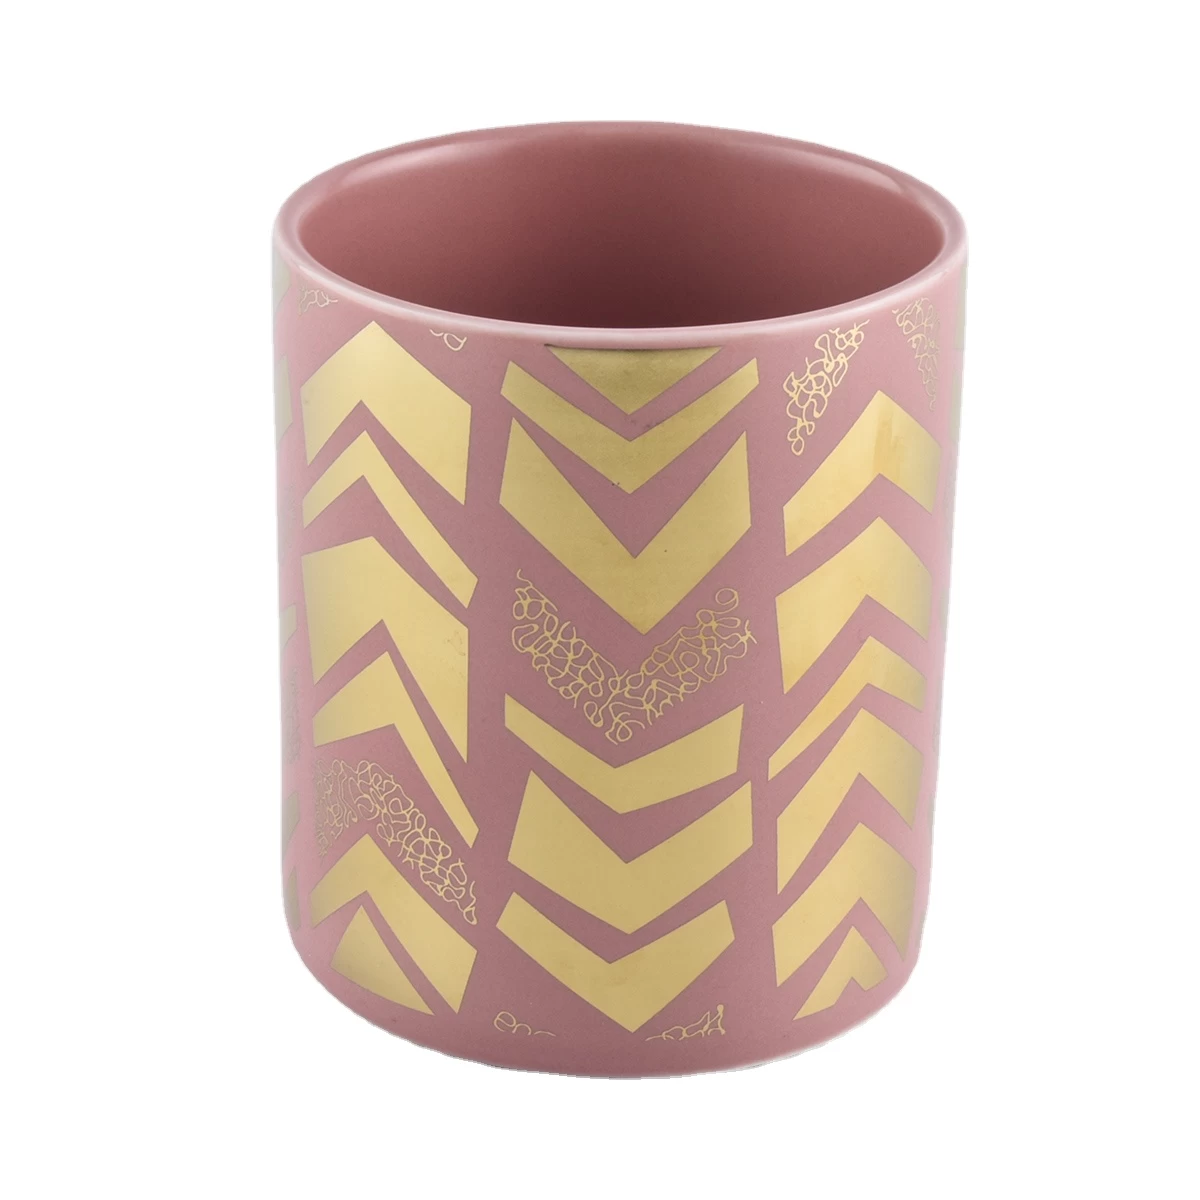 Sunny glassware pink tealight ceramic candle jar holders